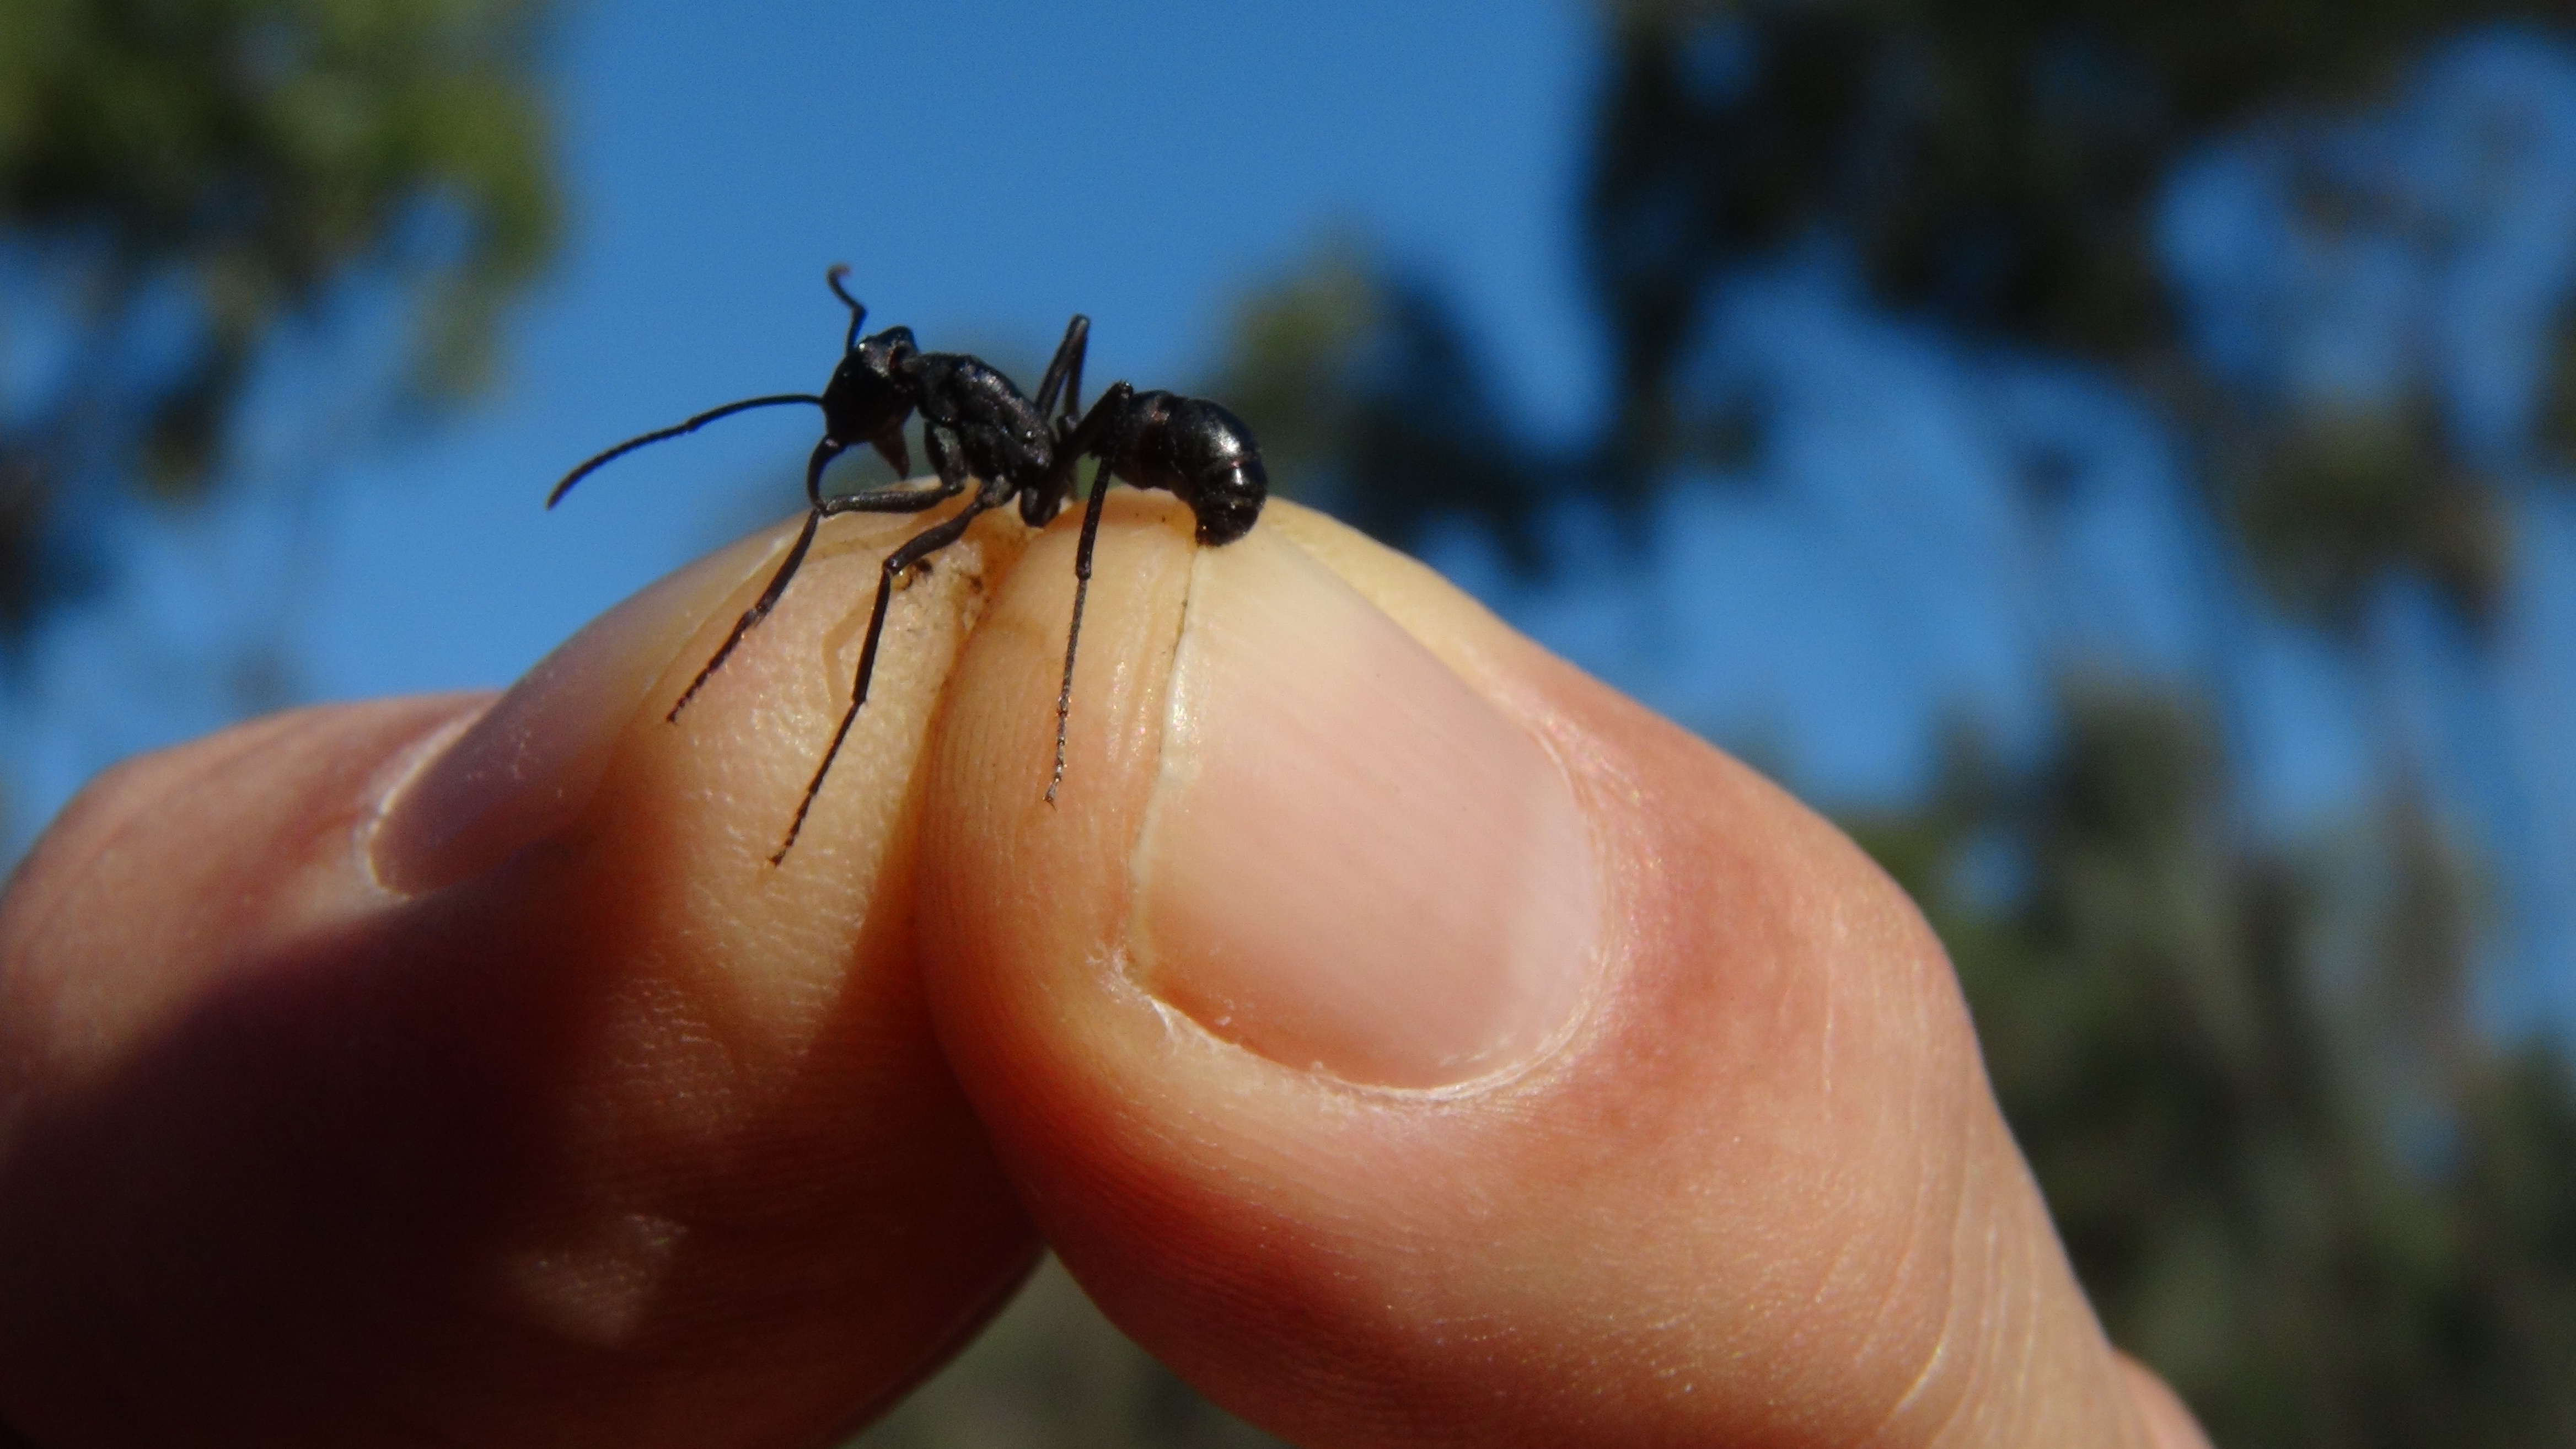 Ant being held between two fingers